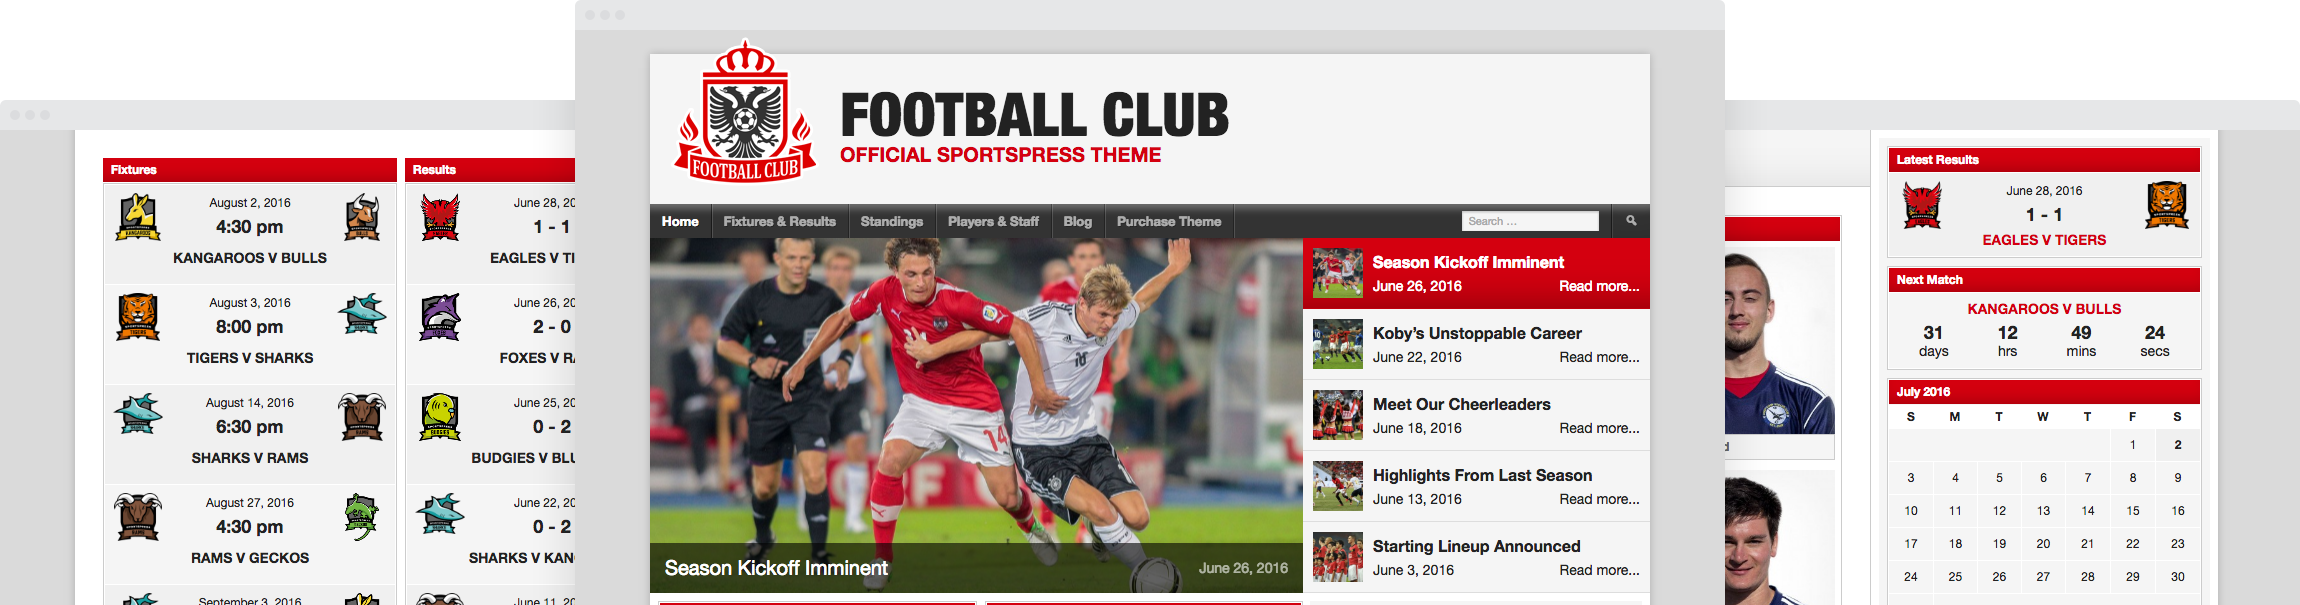 Football Club - Premium WordPress Theme for Soccer Teams